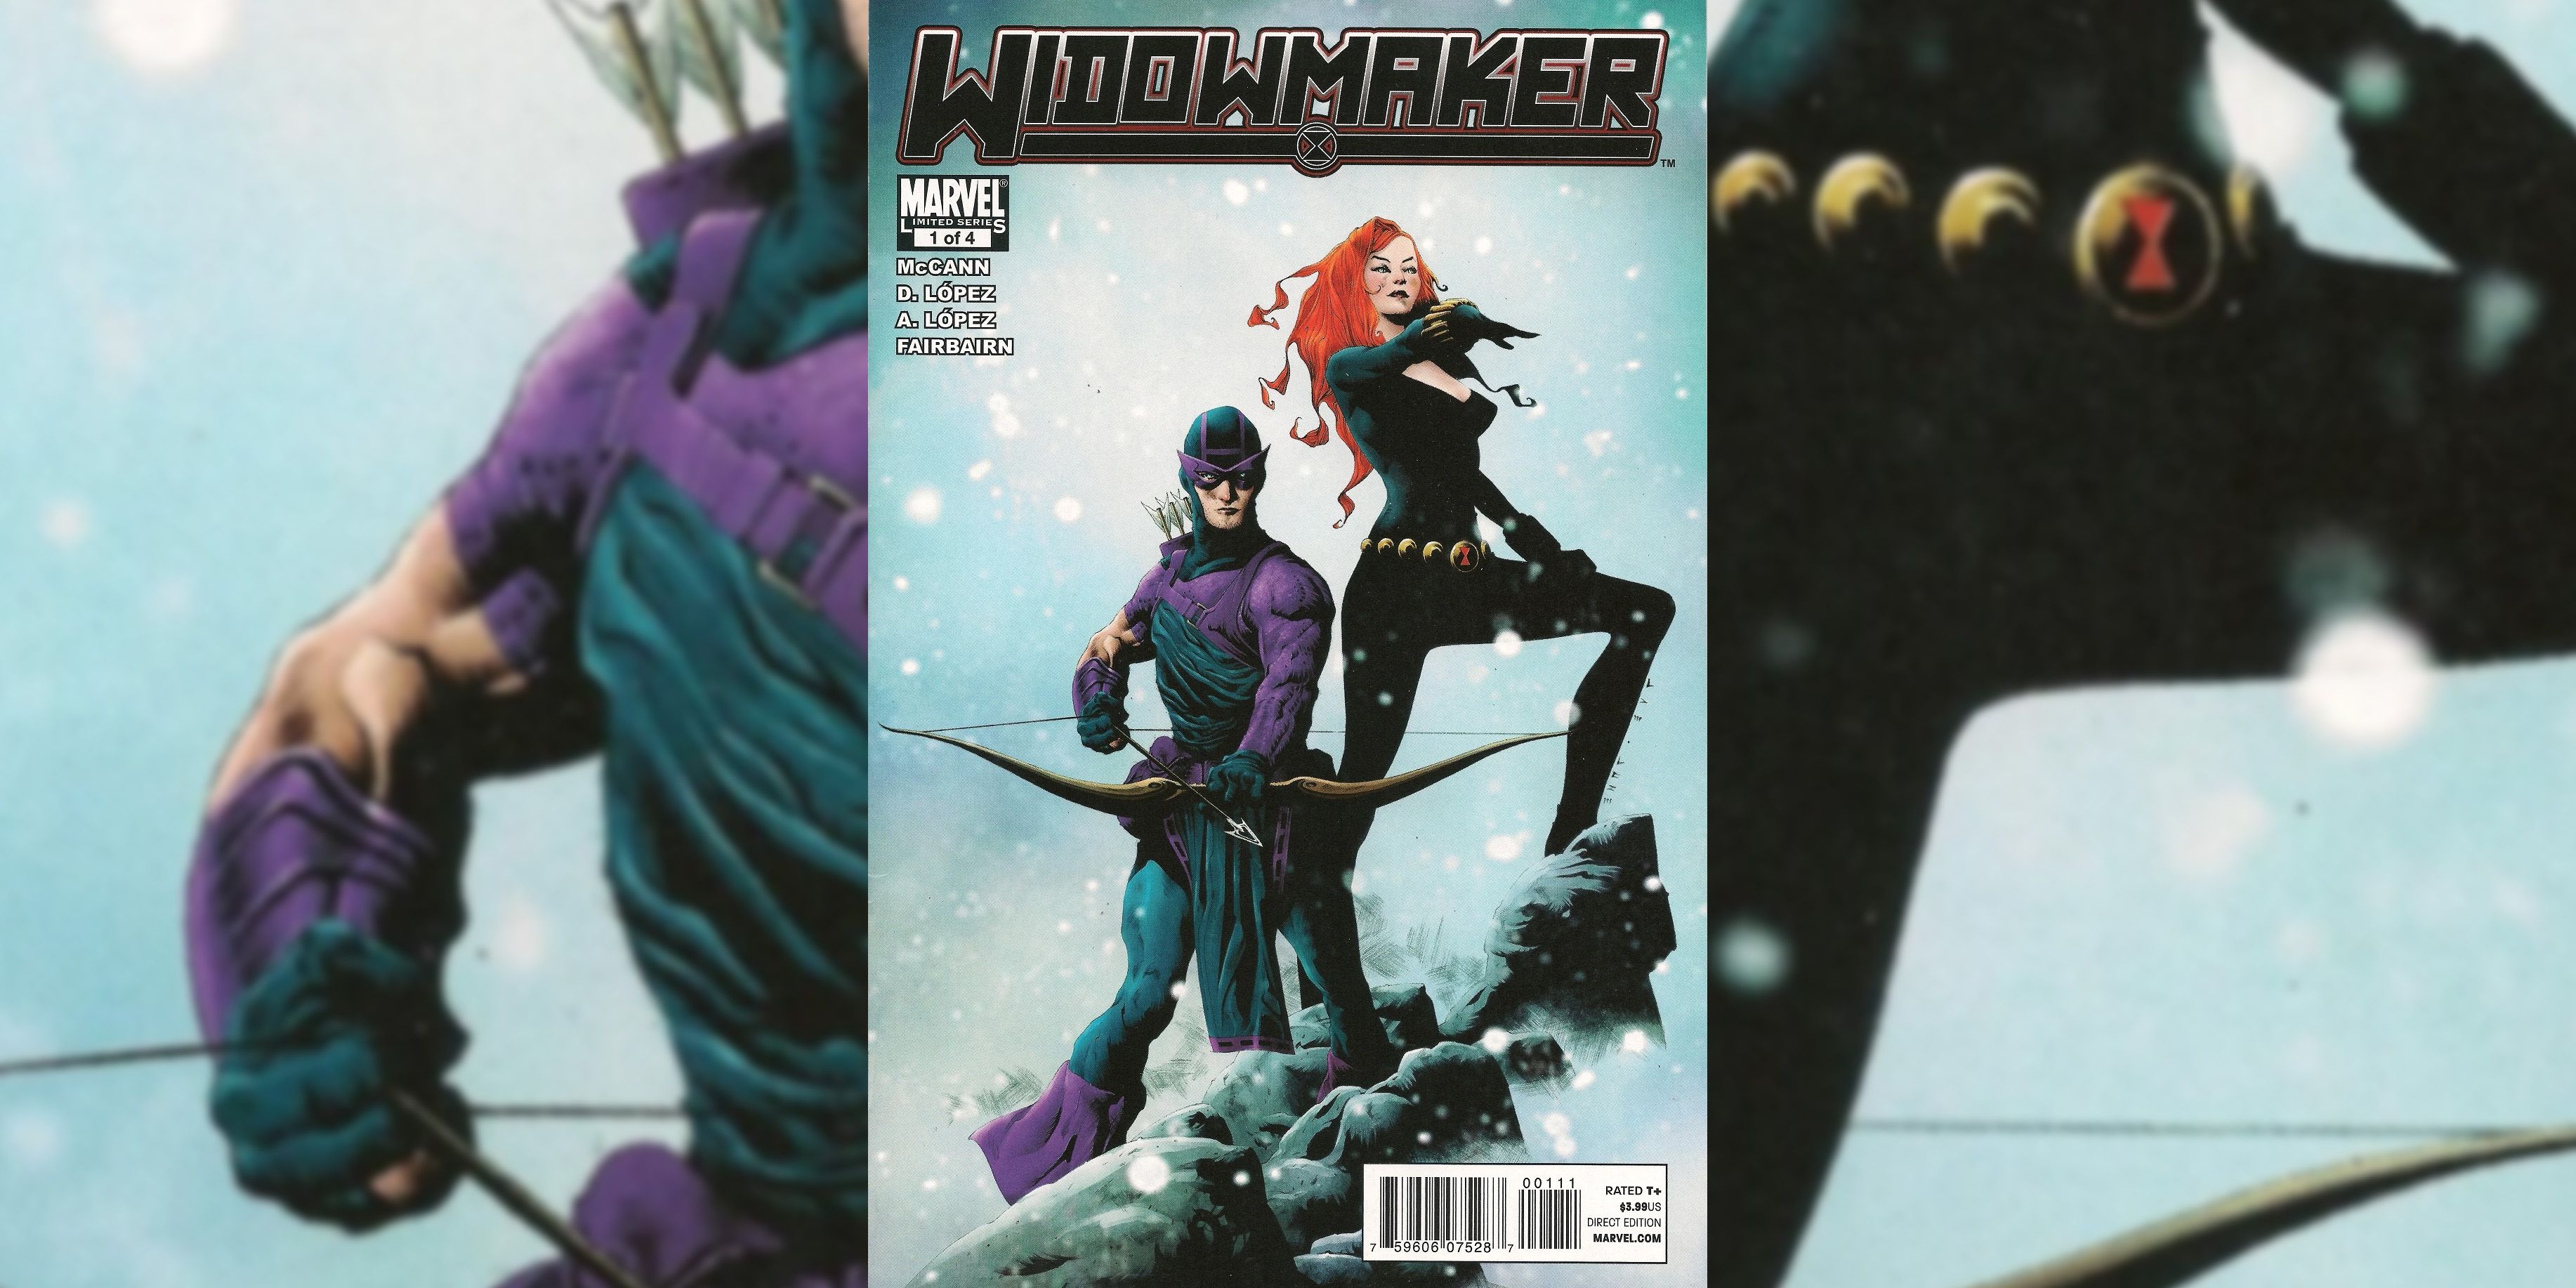 Black Widow's Widowmaker storyline